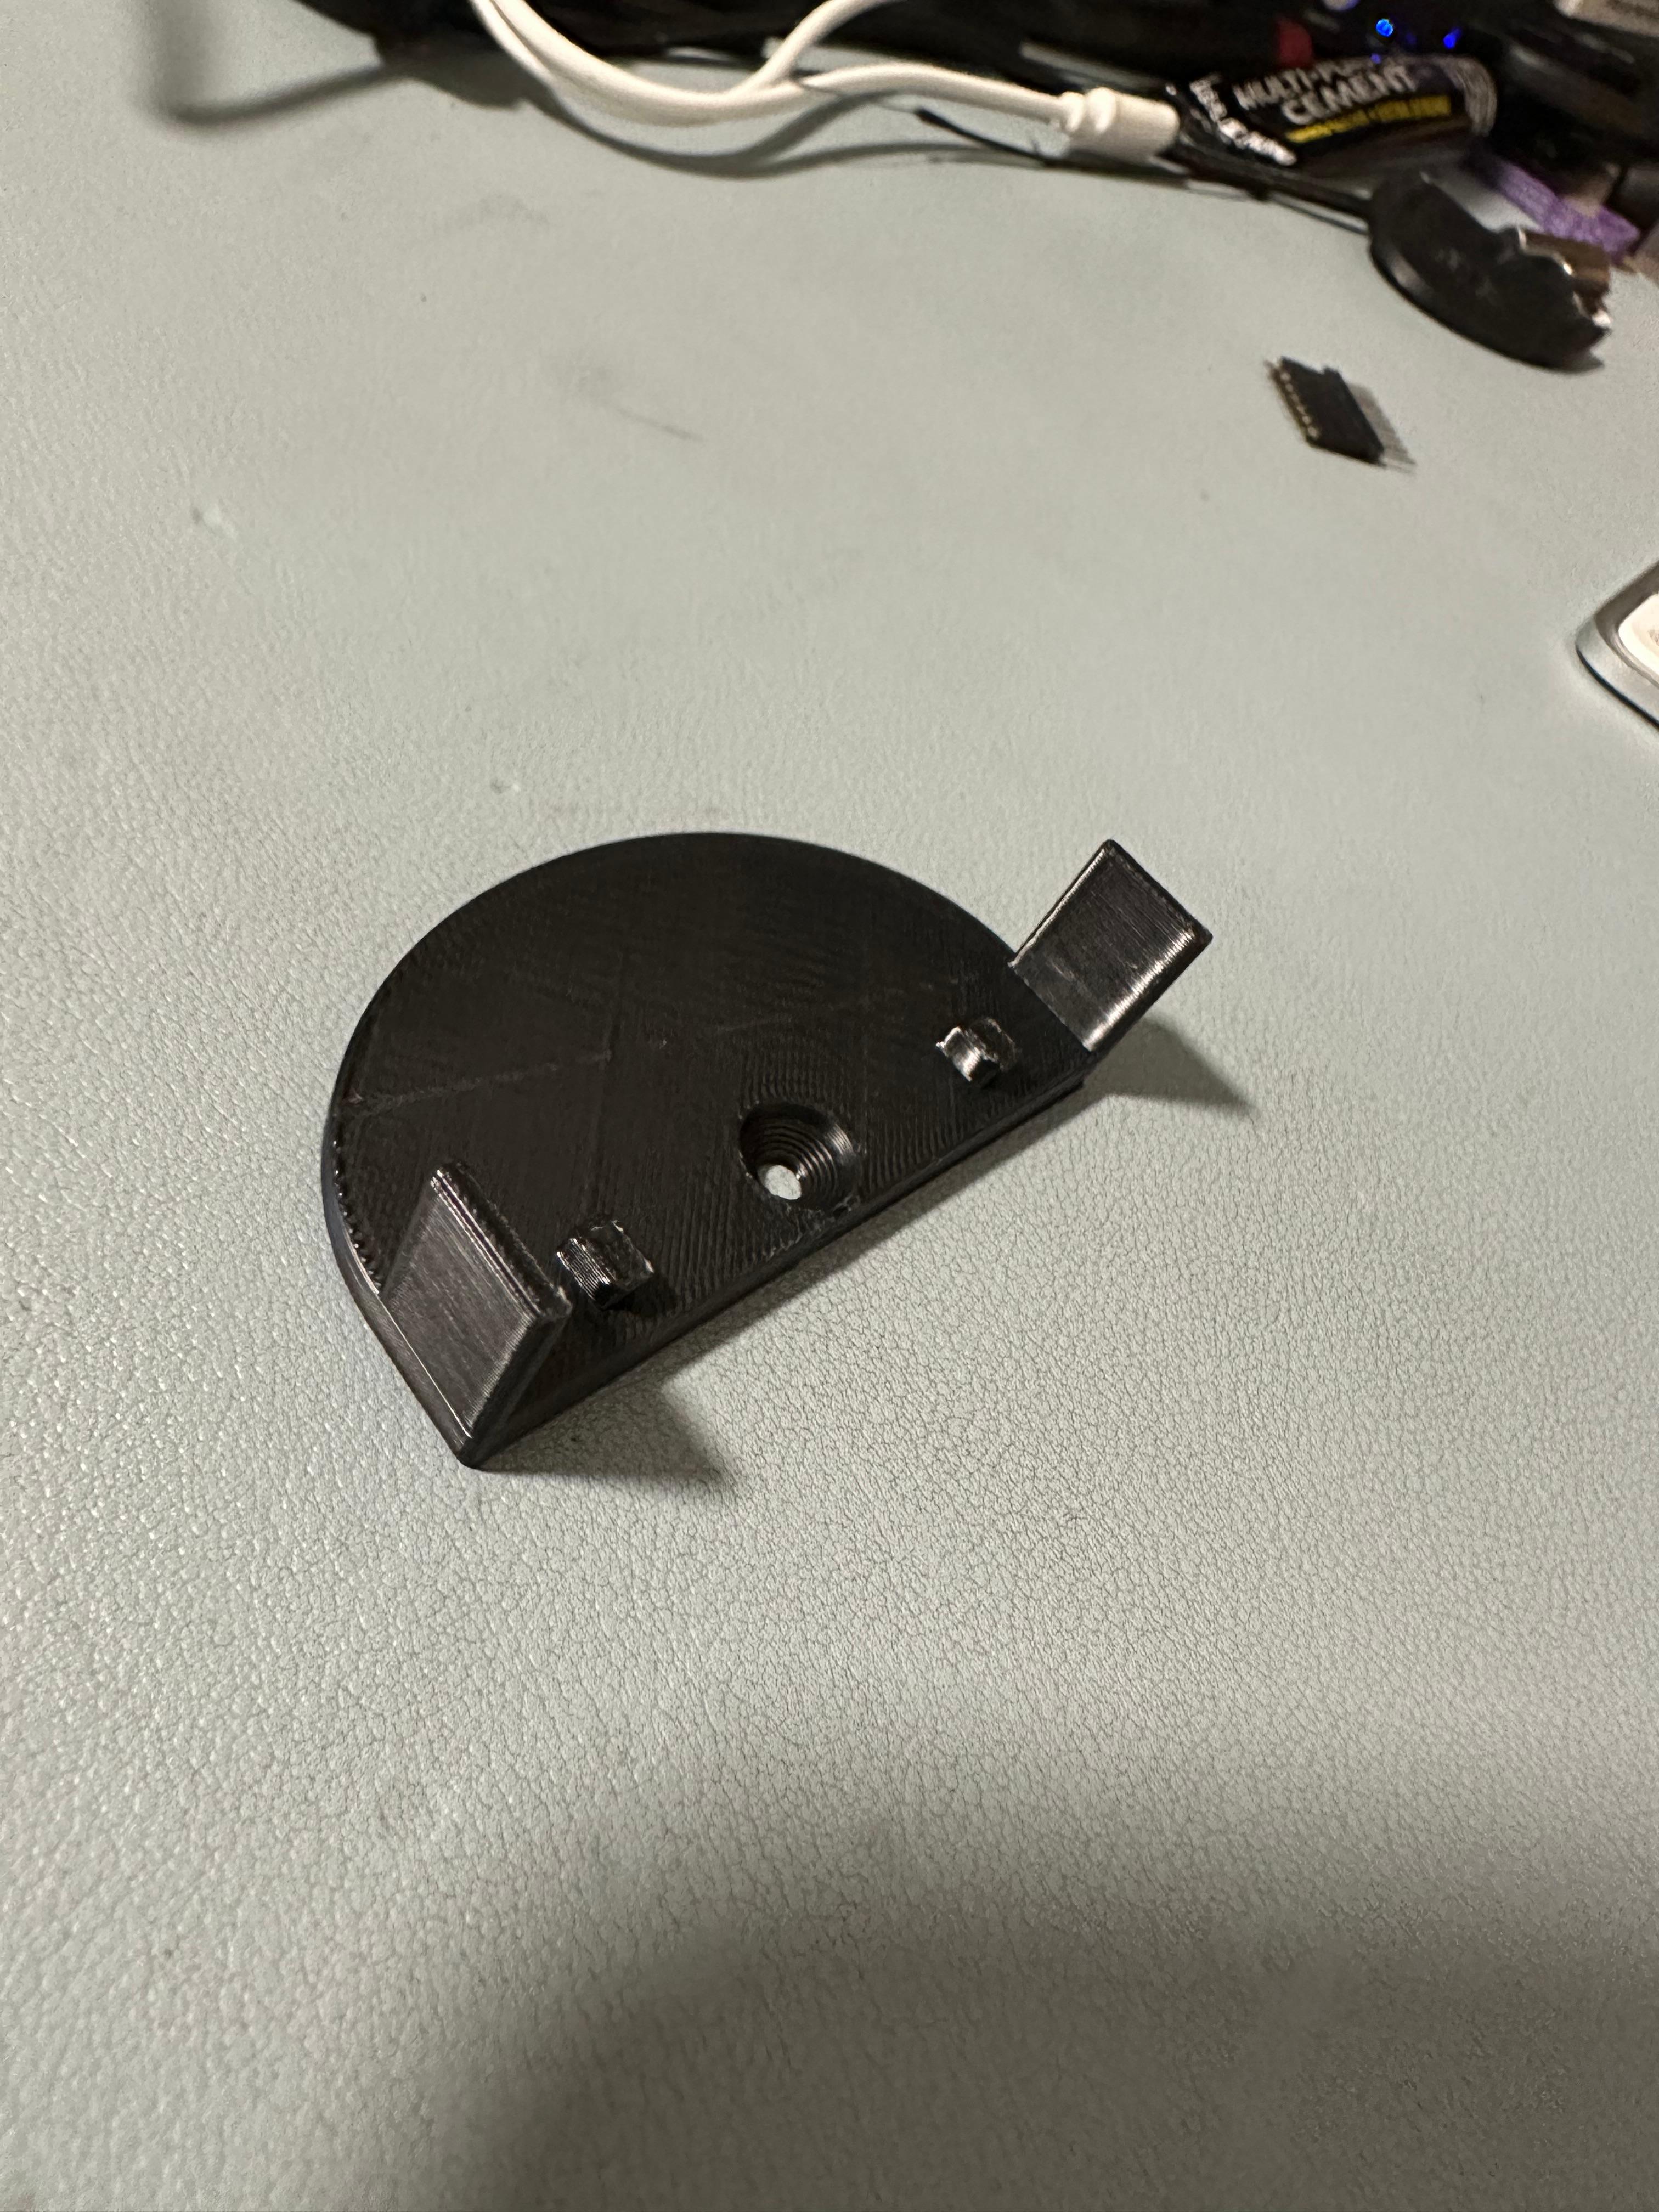 Eve Air Quality Sensor - Wall Mount 3d model